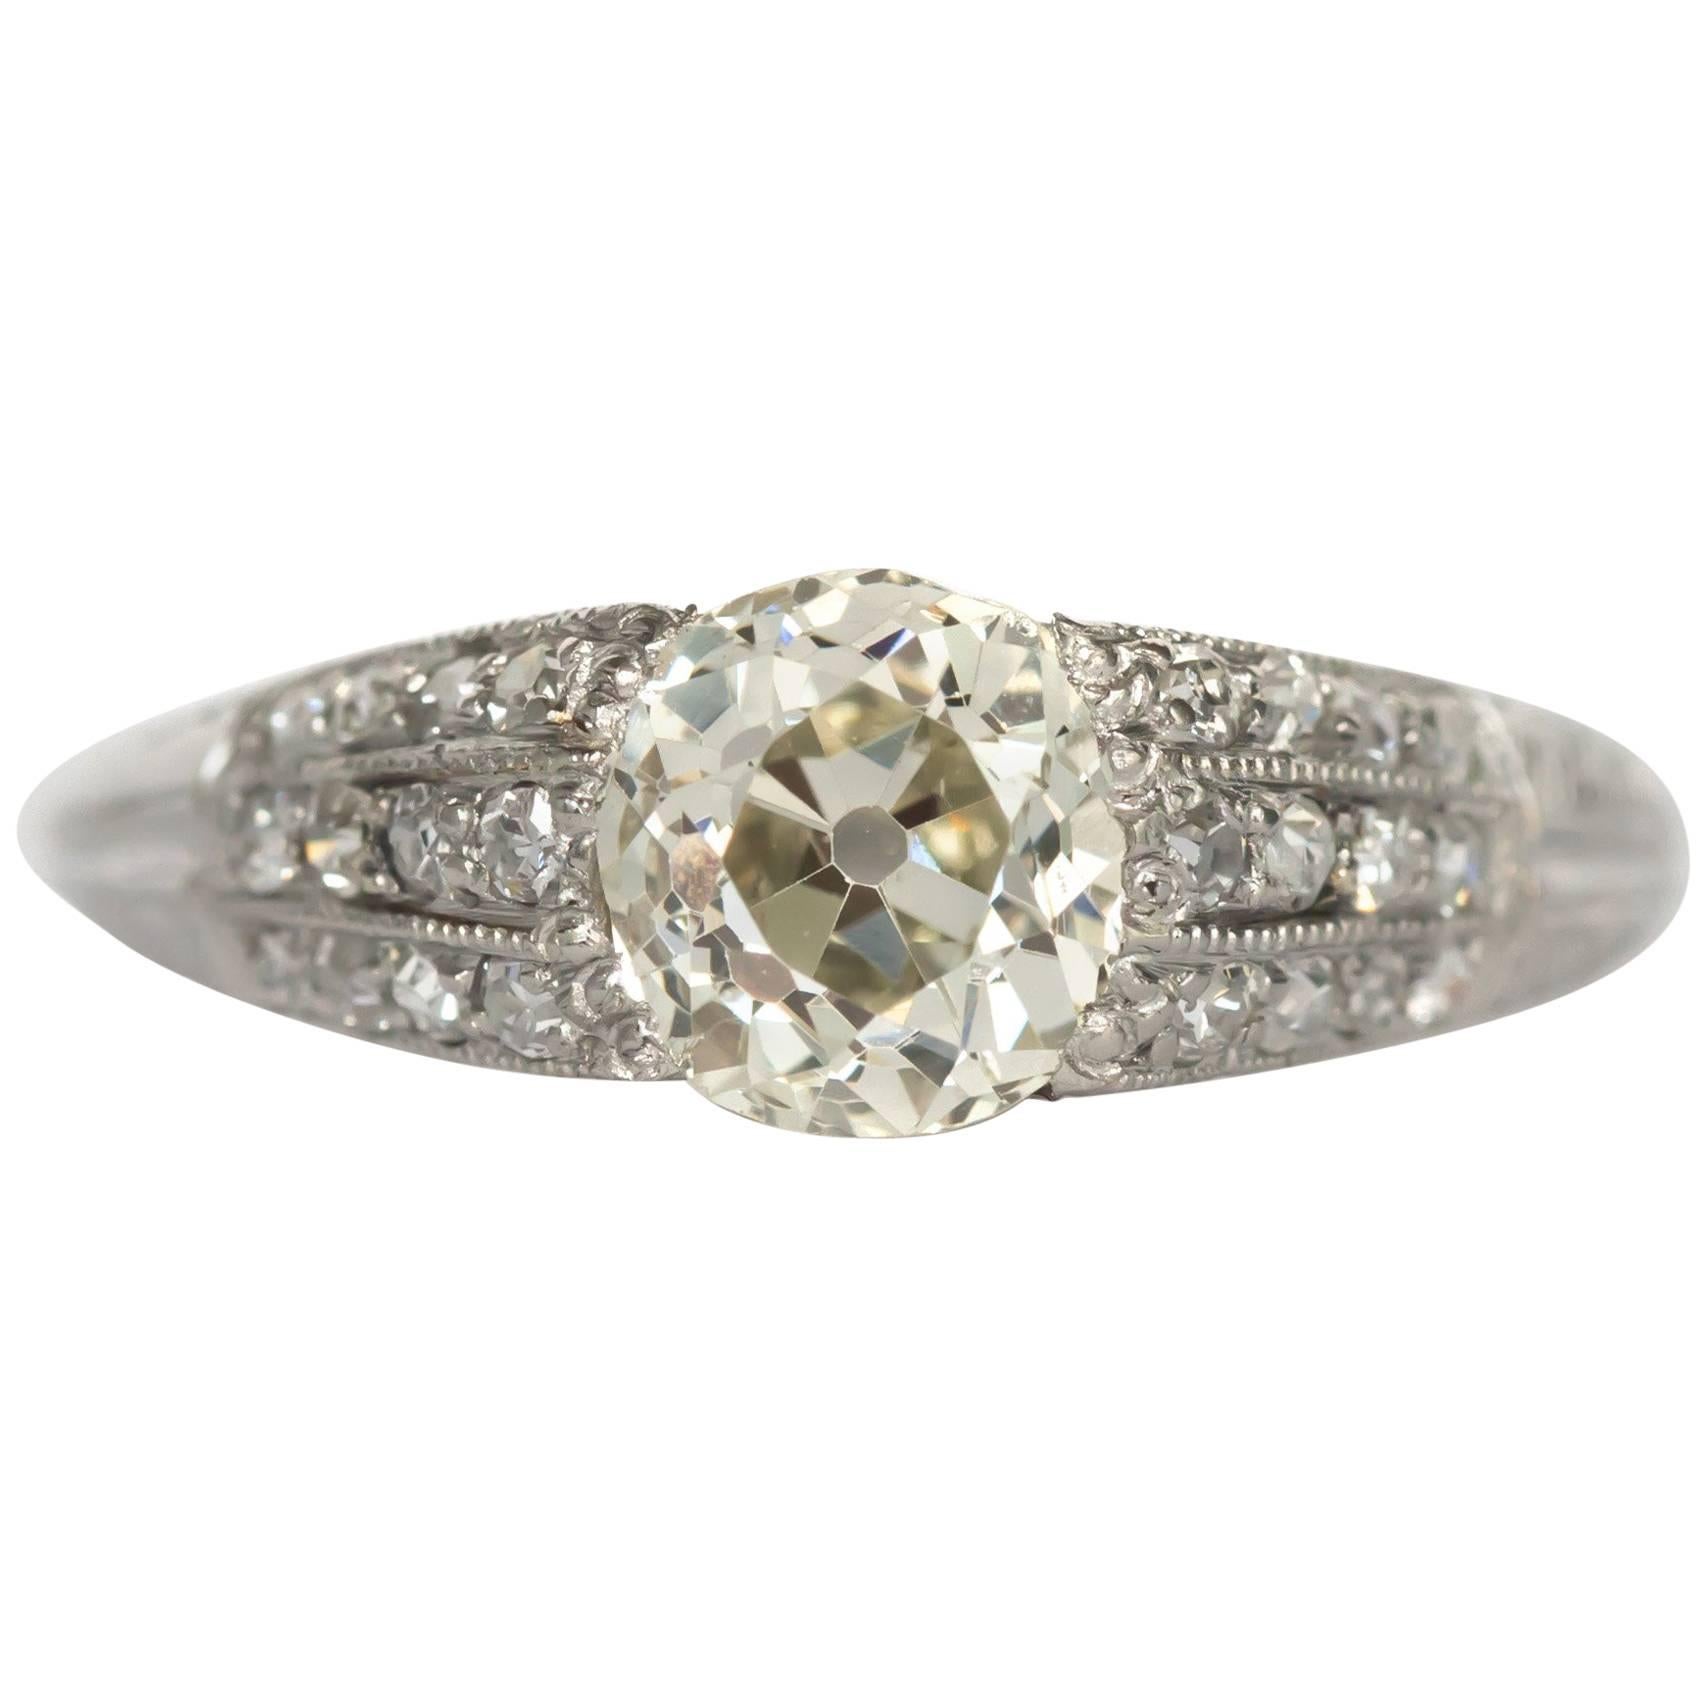 1920s Art Deco Platinum GIA Certified 1.27 Carat Diamond Engagement Ring